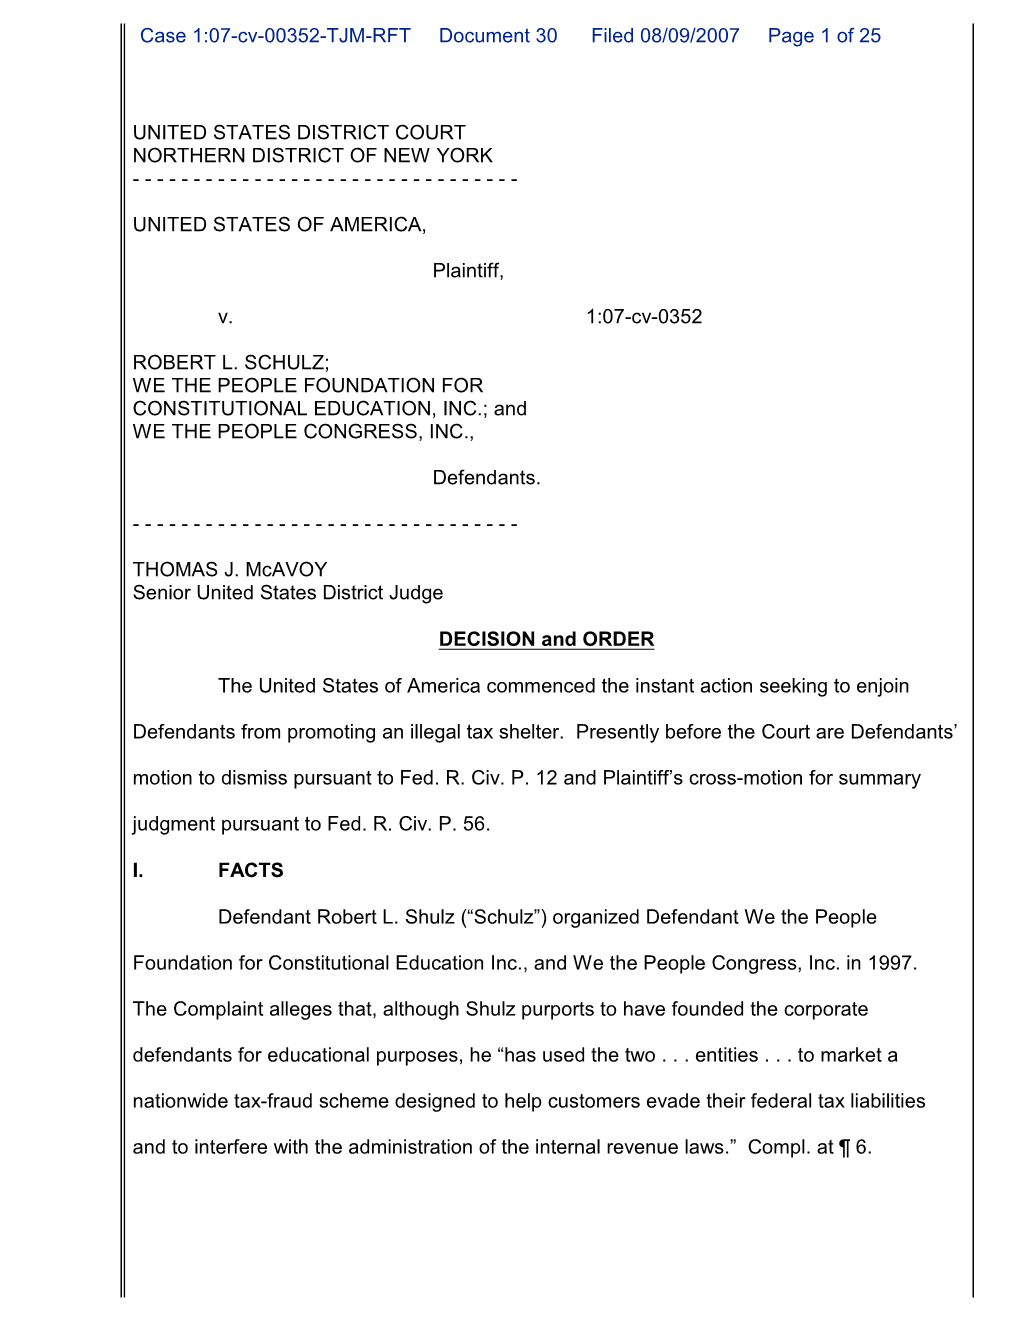 Case 1:07-Cv-00352-TJM-RFT Document 30 Filed 08/09/2007 Page 1 of 25